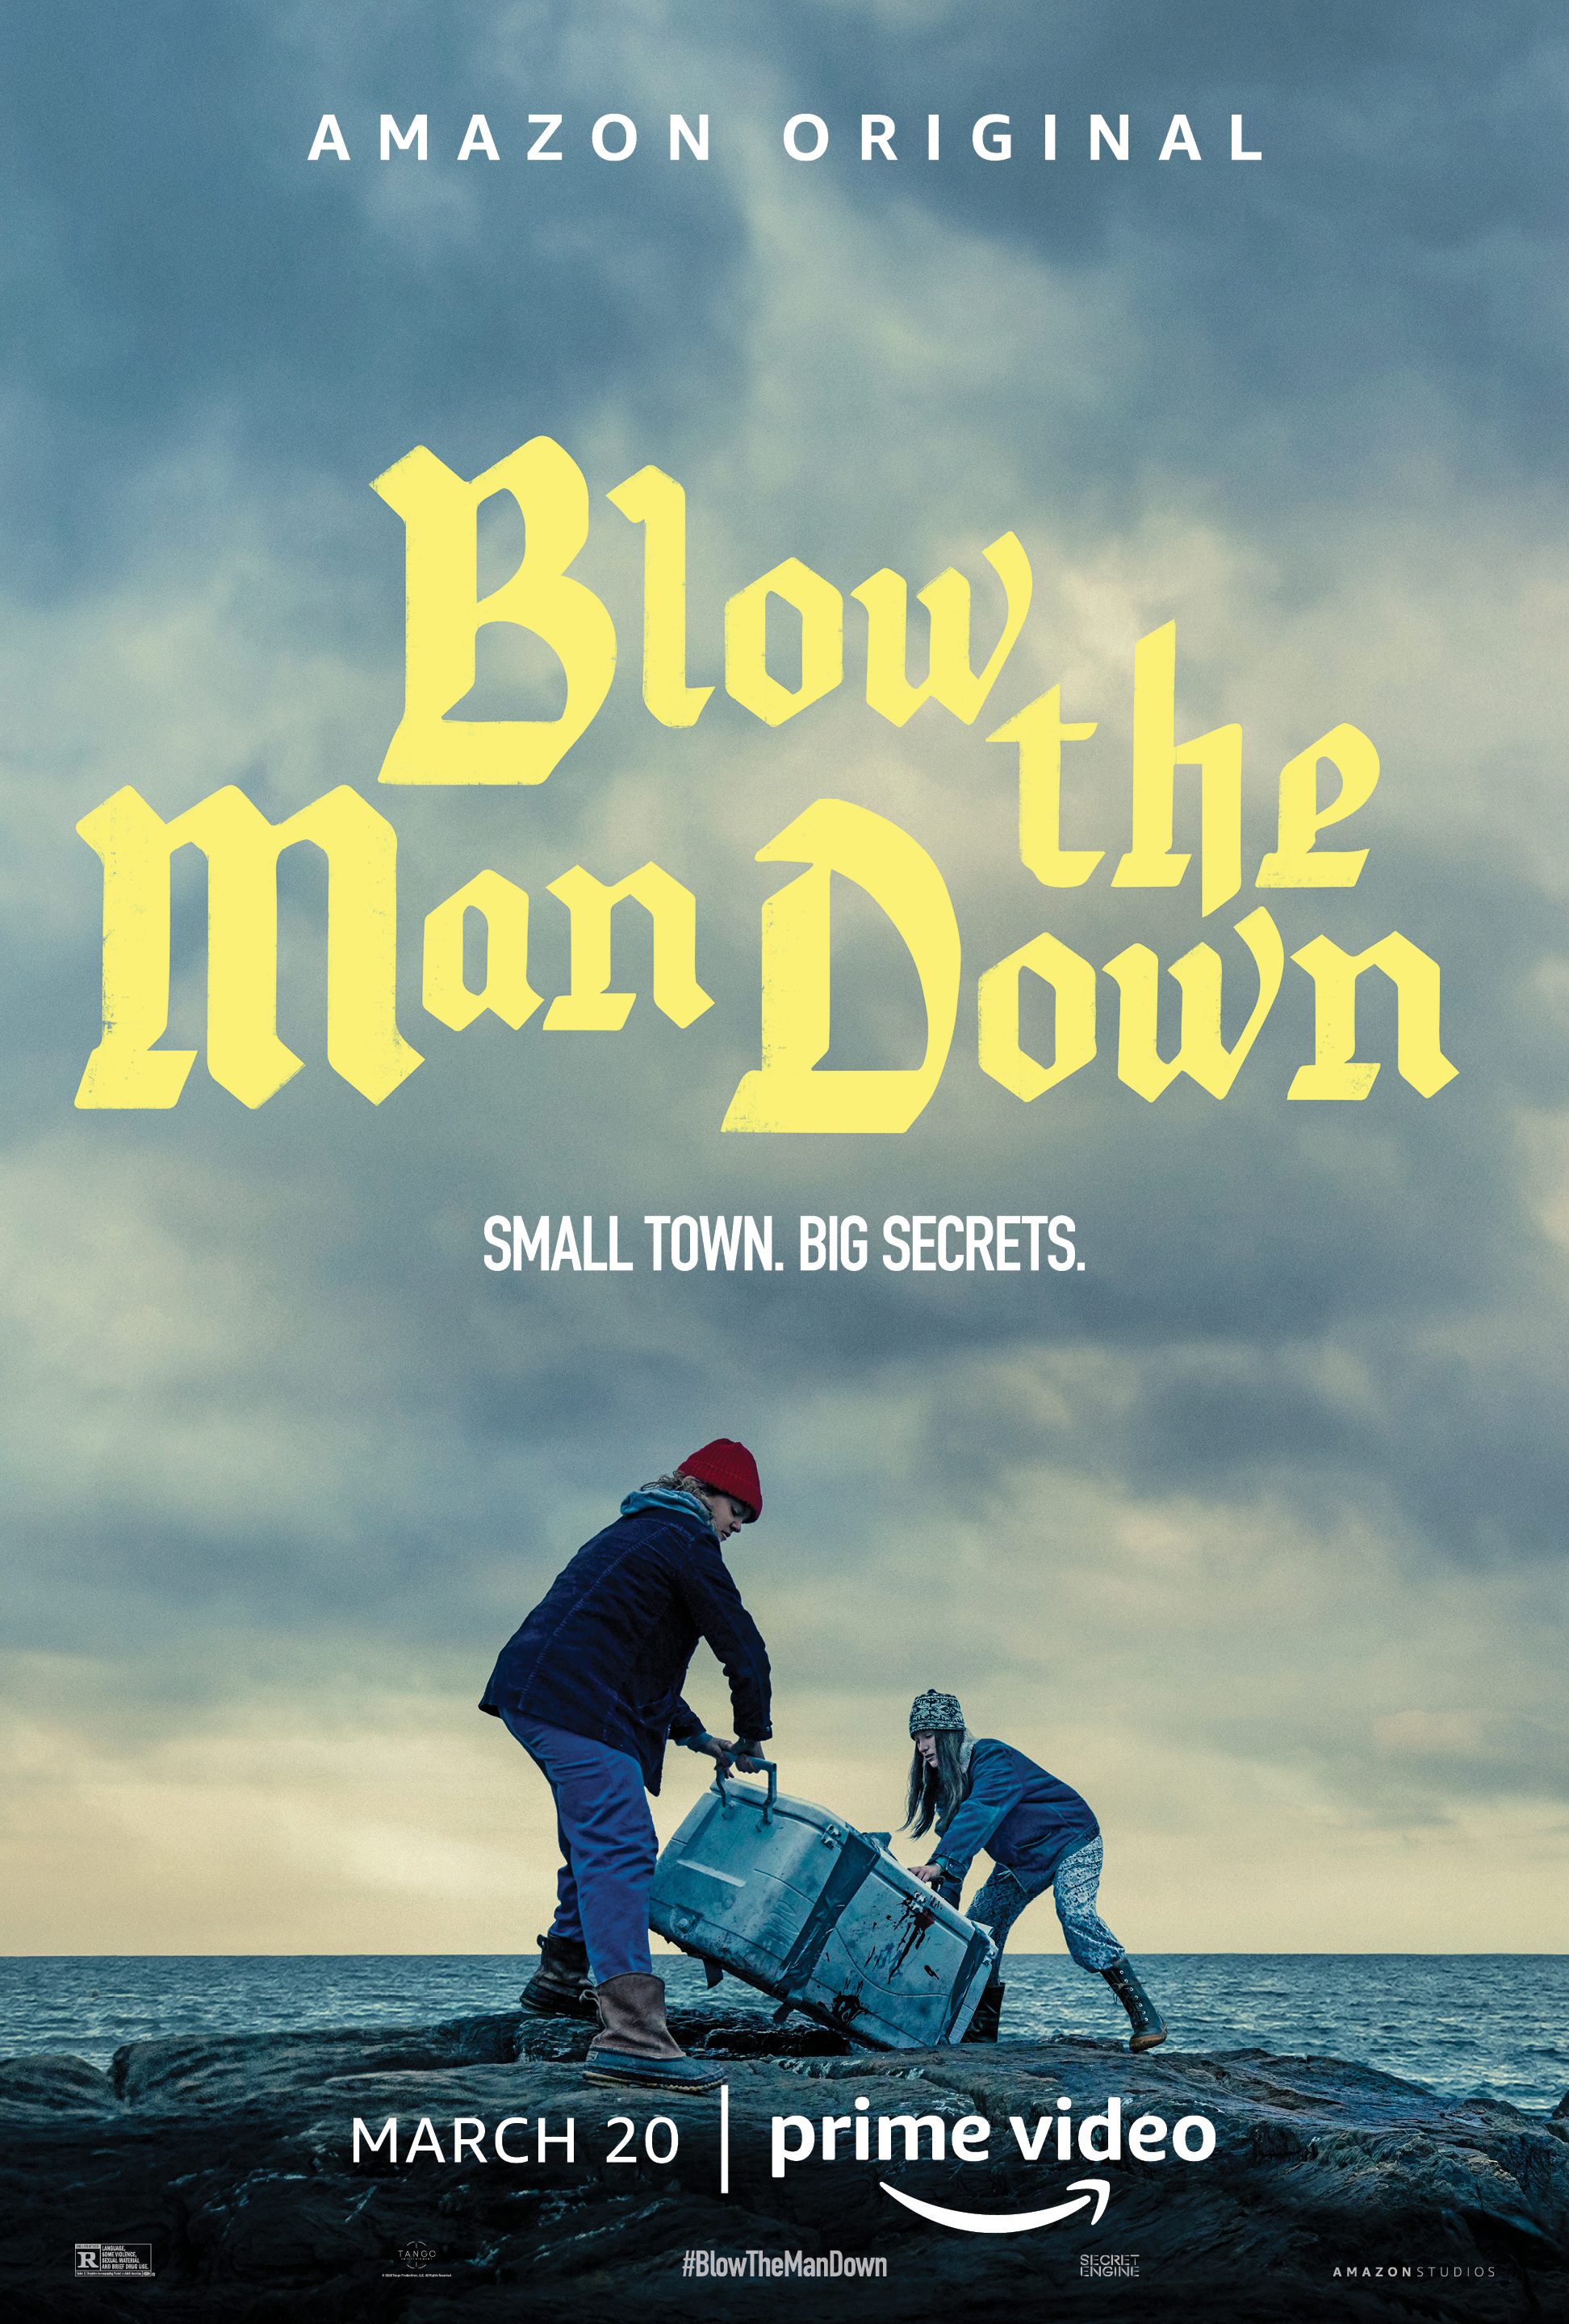 Stiahni si Filmy CZ/SK dabing Temne hlubiny / Blow the Man Down (2019)(CZ)[WEBrip][1080p]